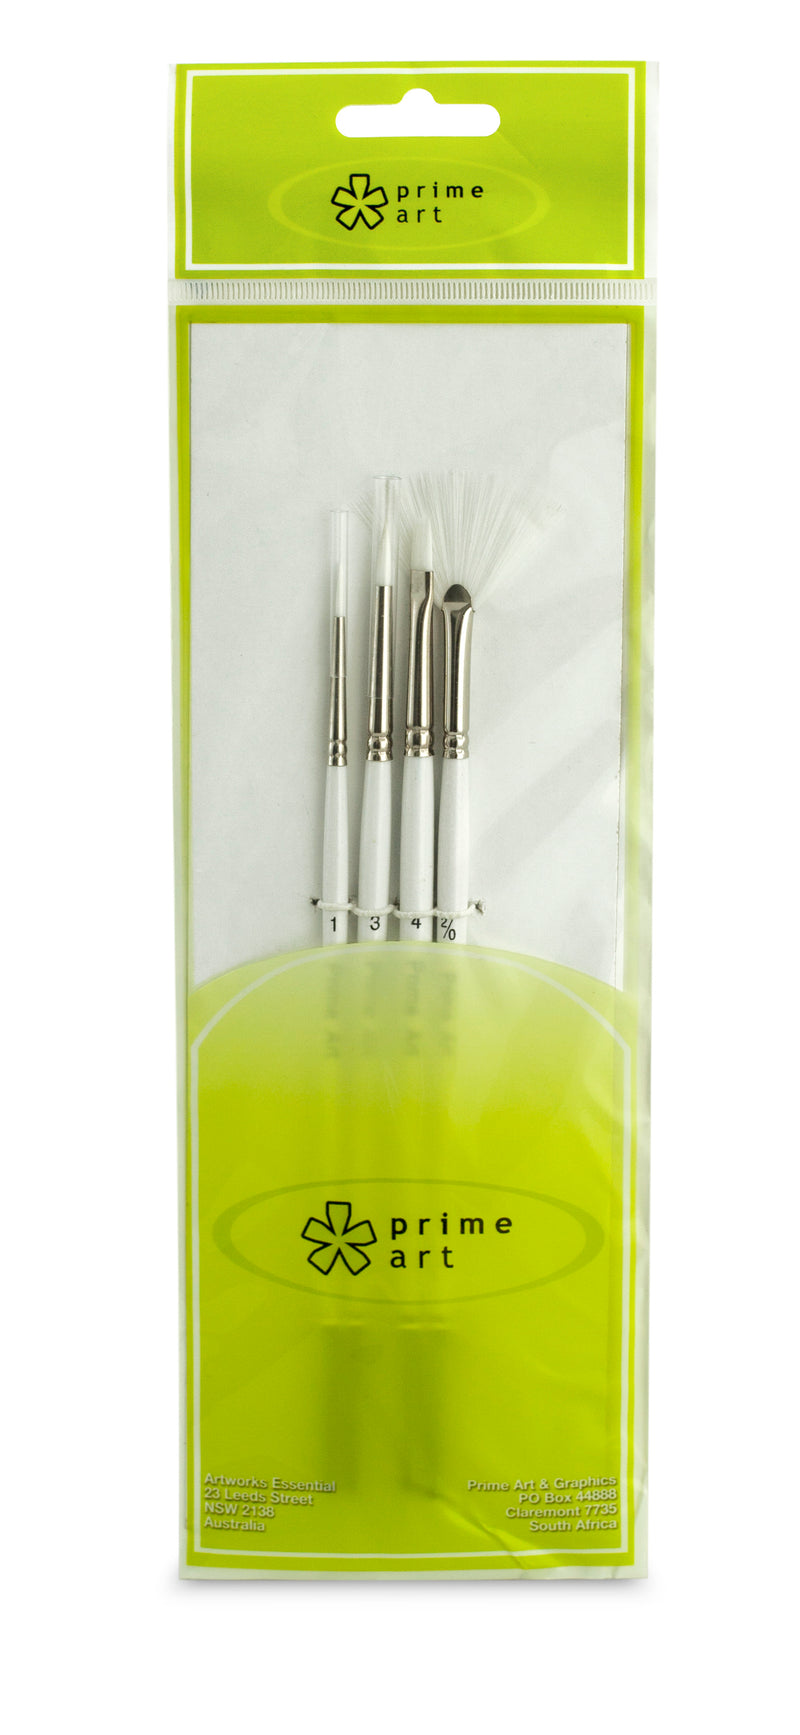 Prime Art Professional & Synthetic brush 2 round & 1 fan 1flat - 4 pcs set 4BS7084 - Art Supplies Australia